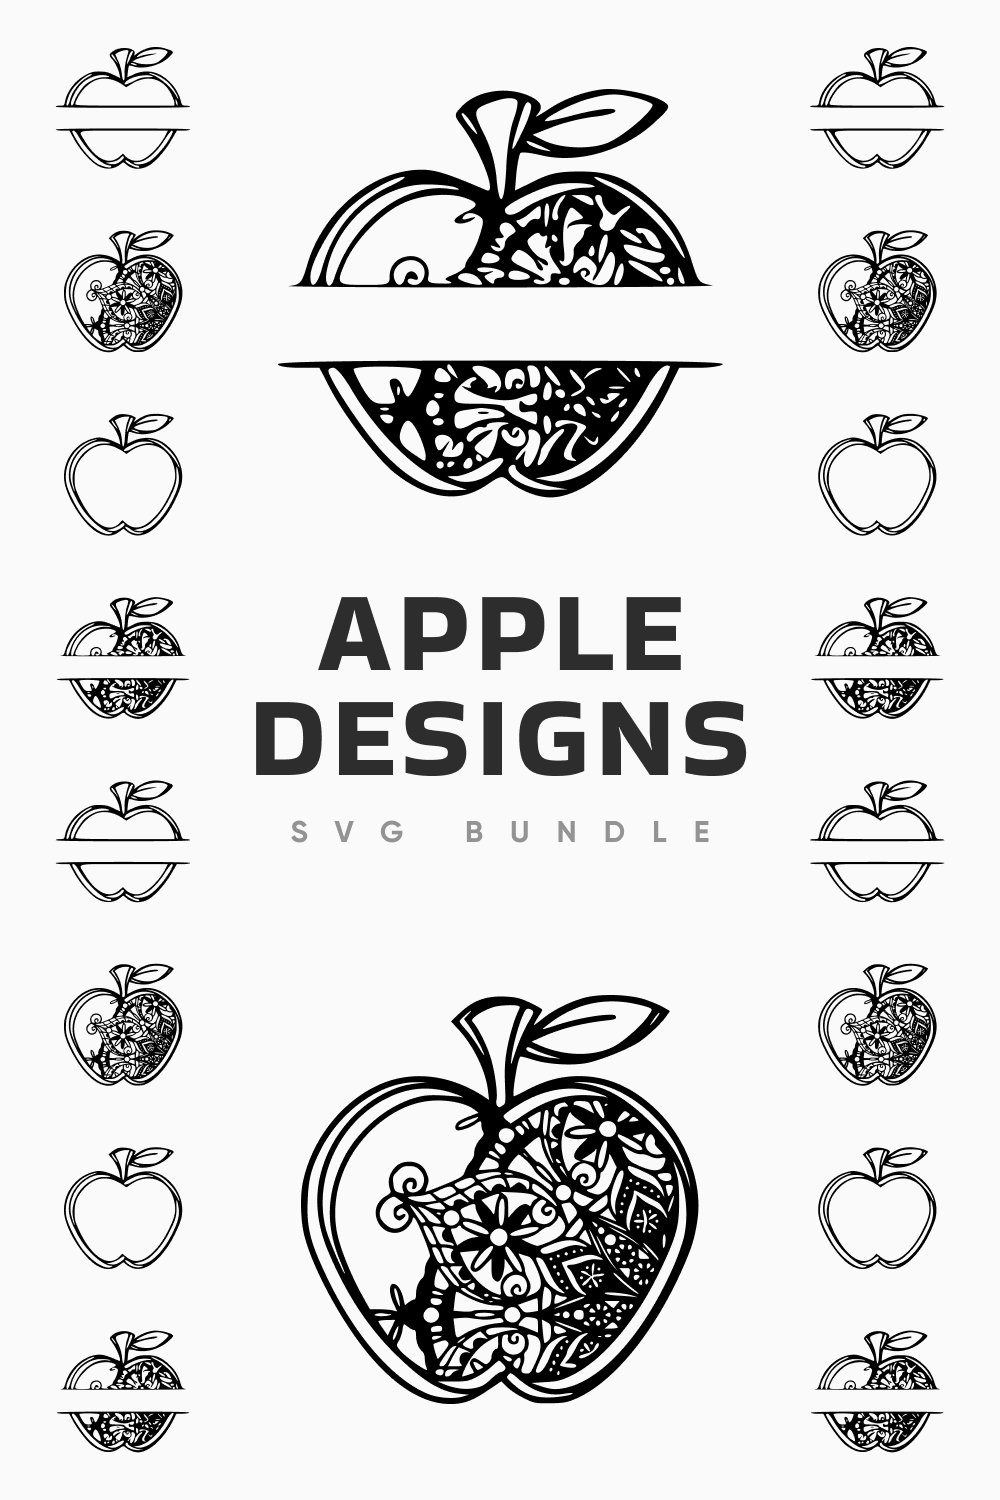 Apple Designs SVG Bundle.